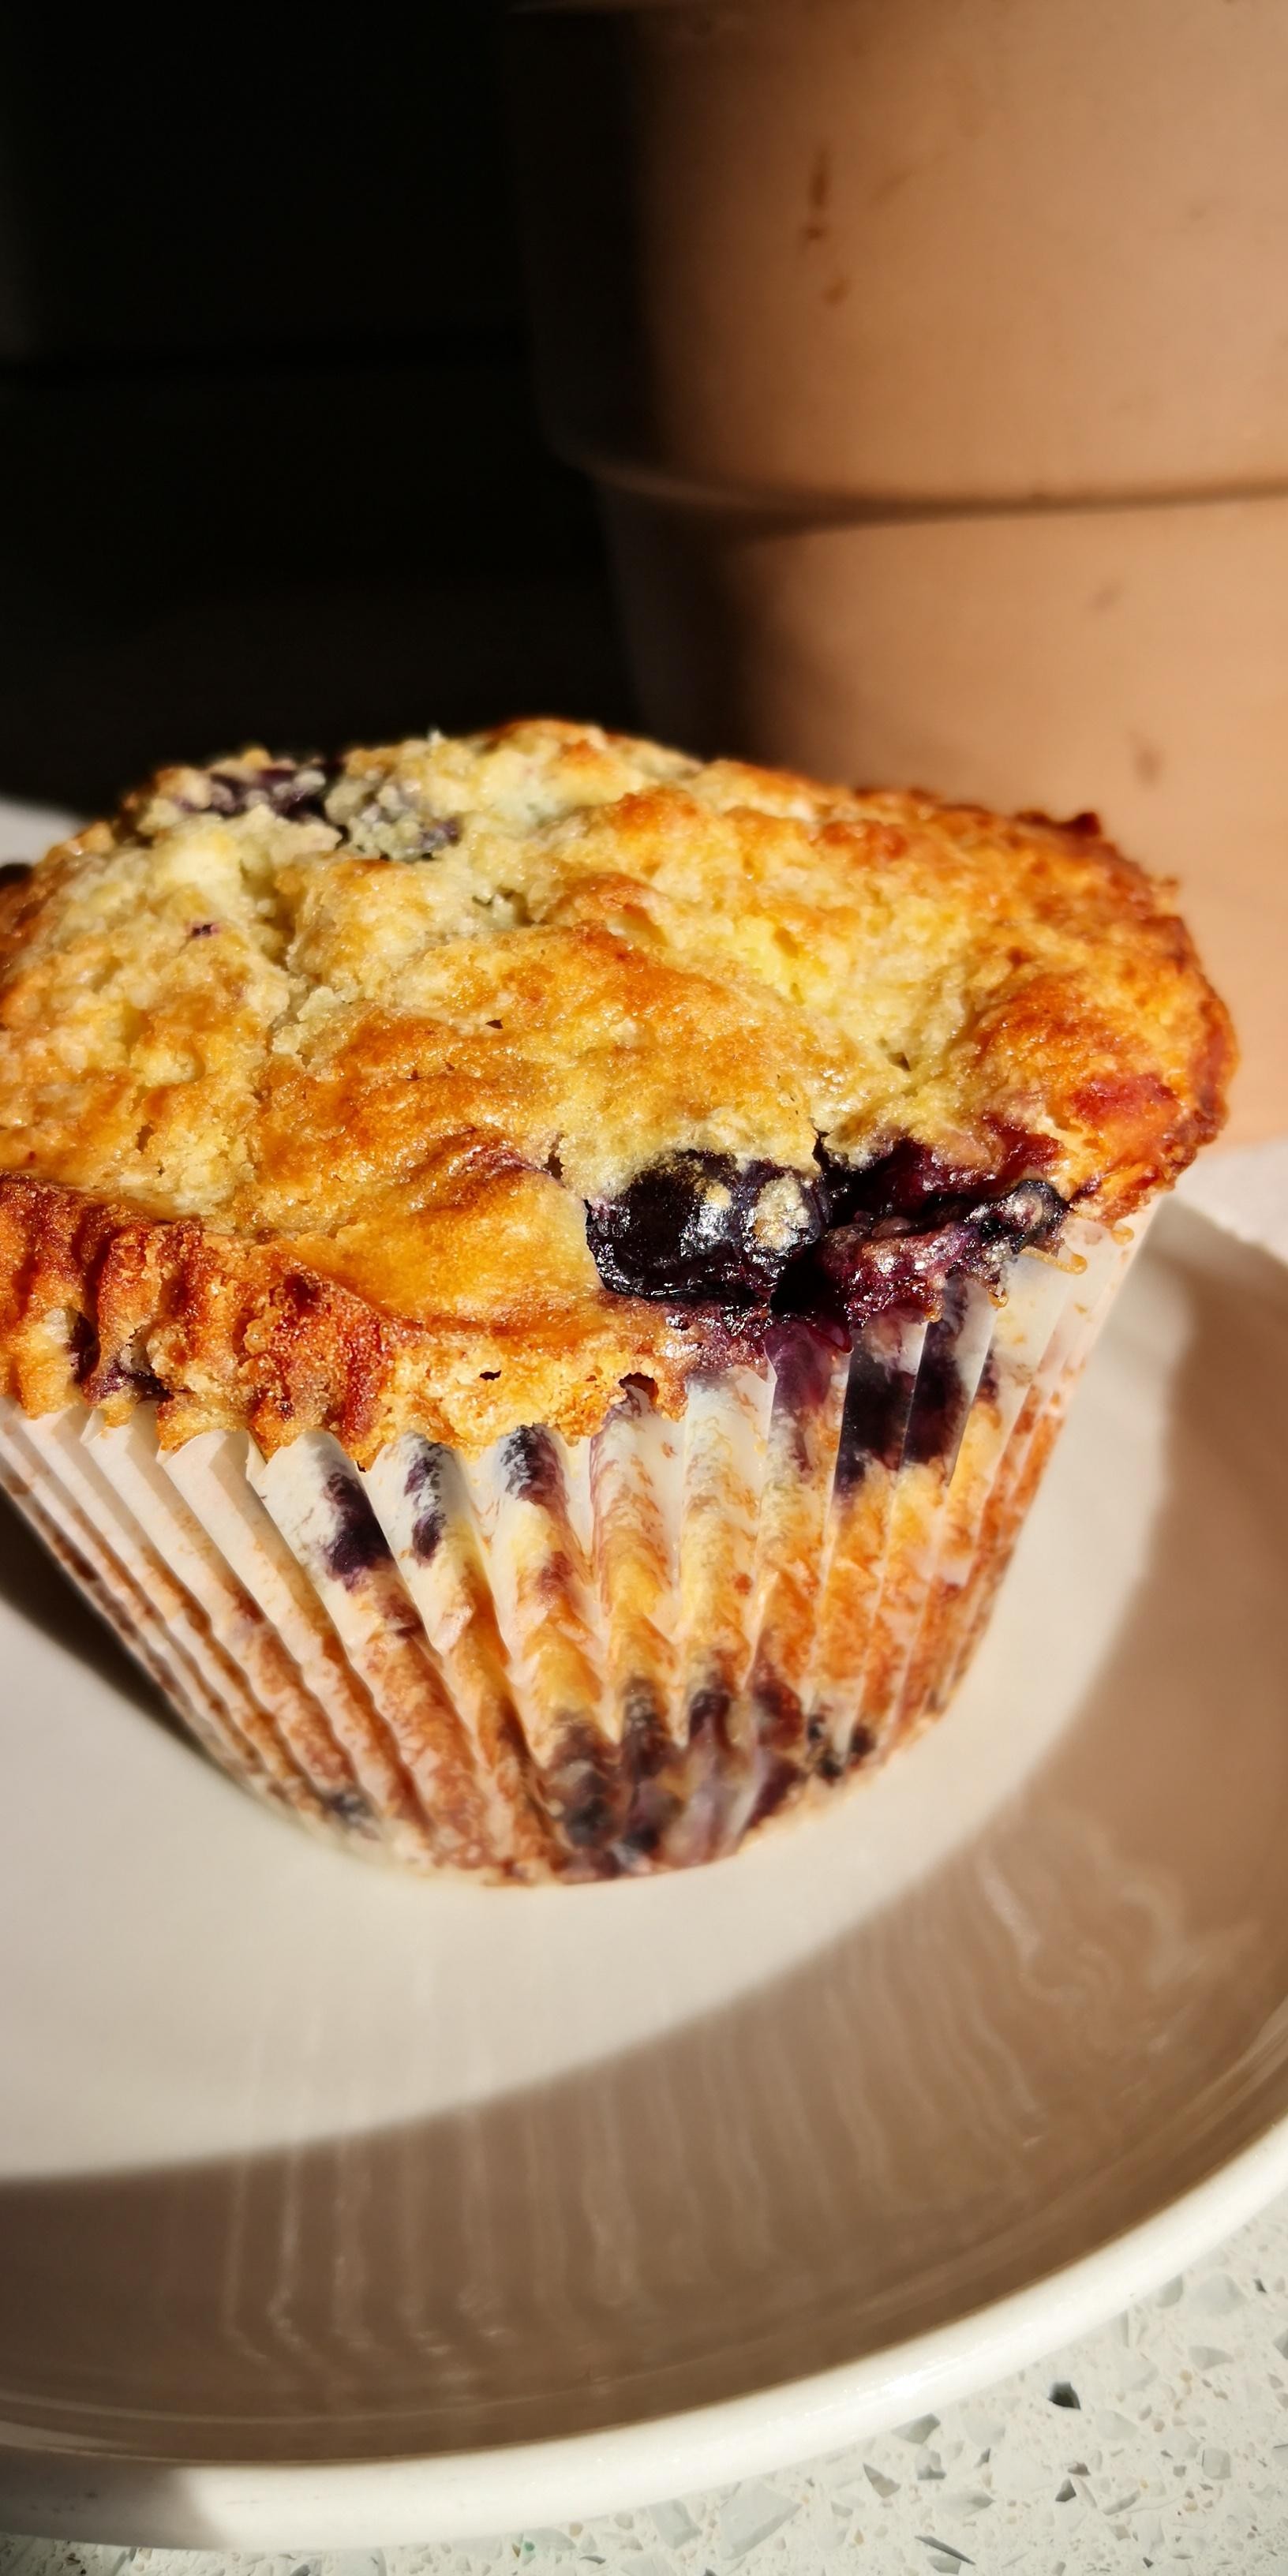 Bluberry Muffin